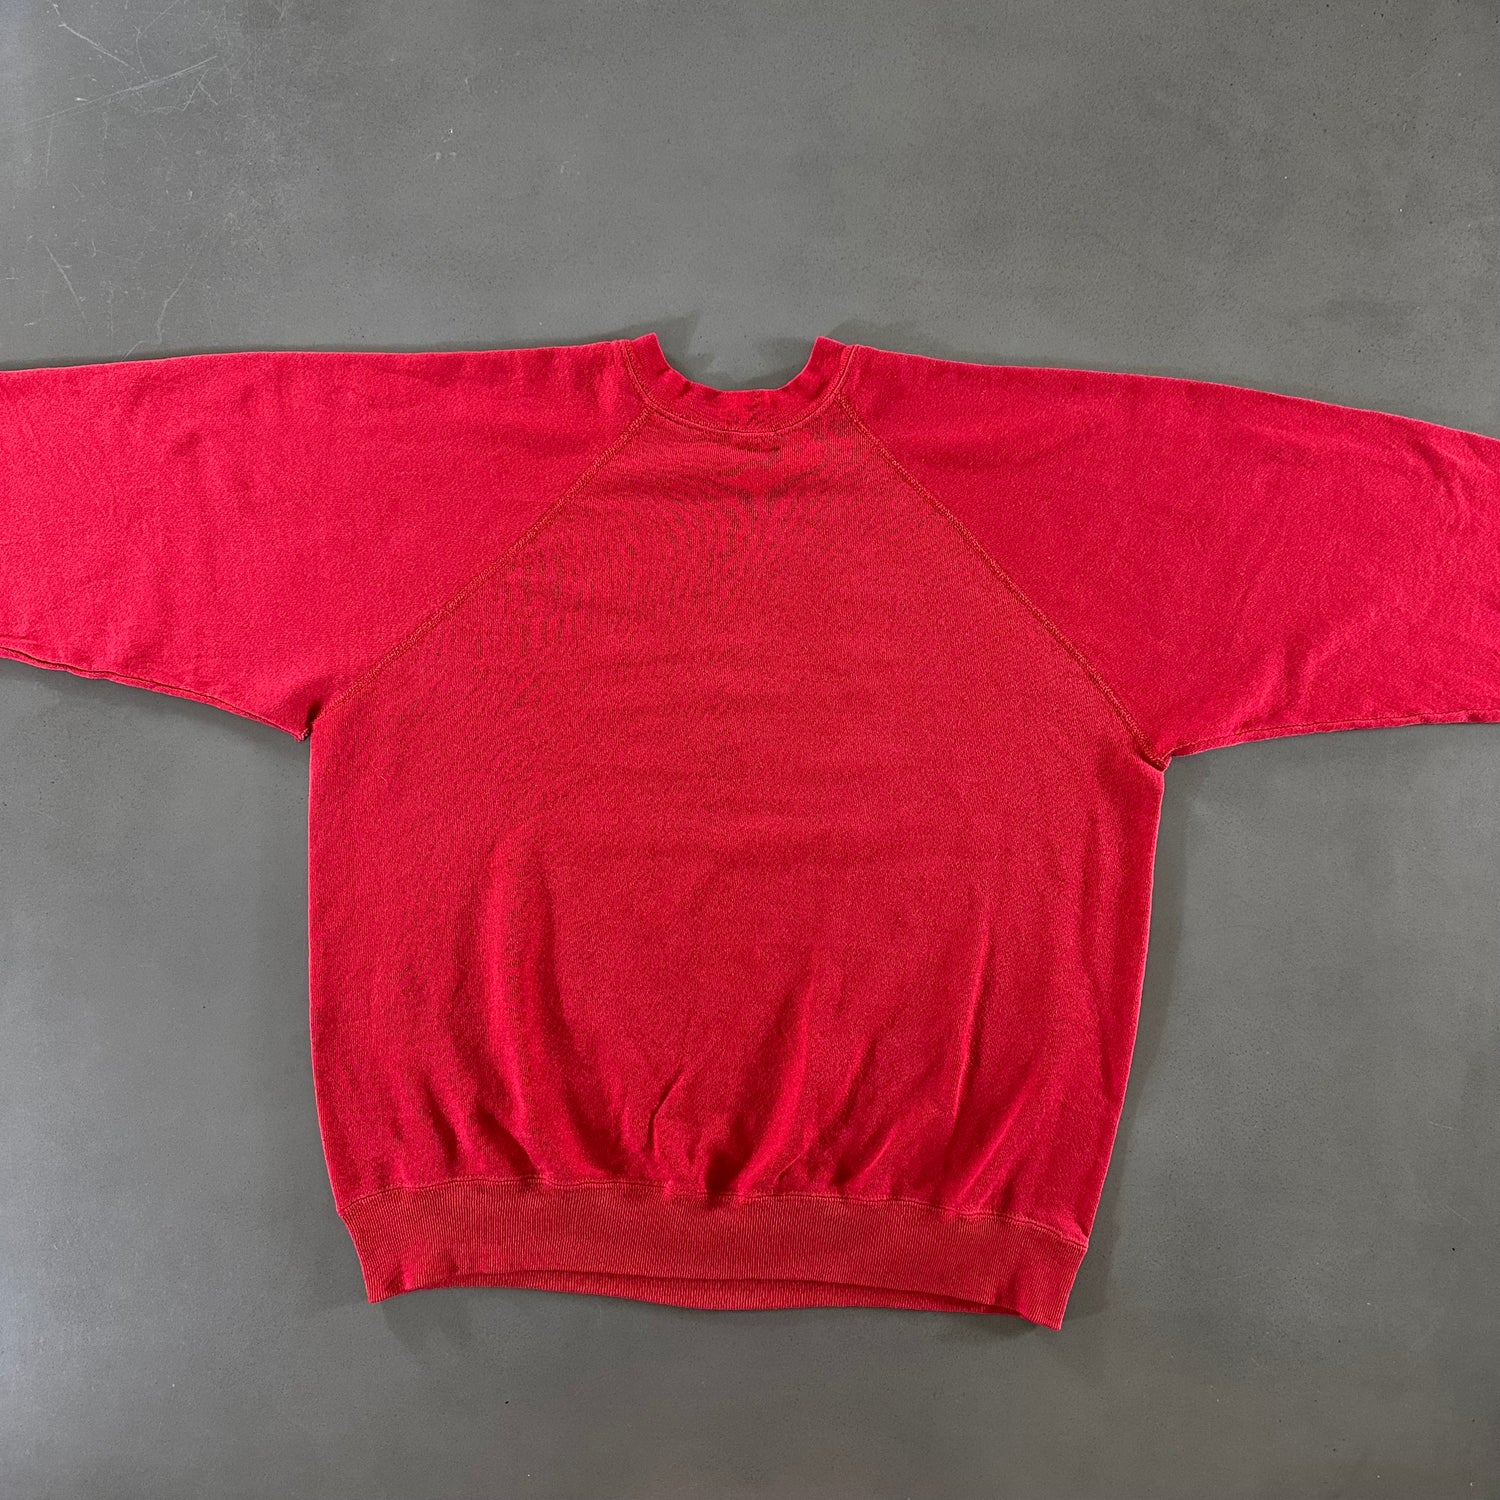 Vintage 1970s Marine Corps Sweatshirt size Large